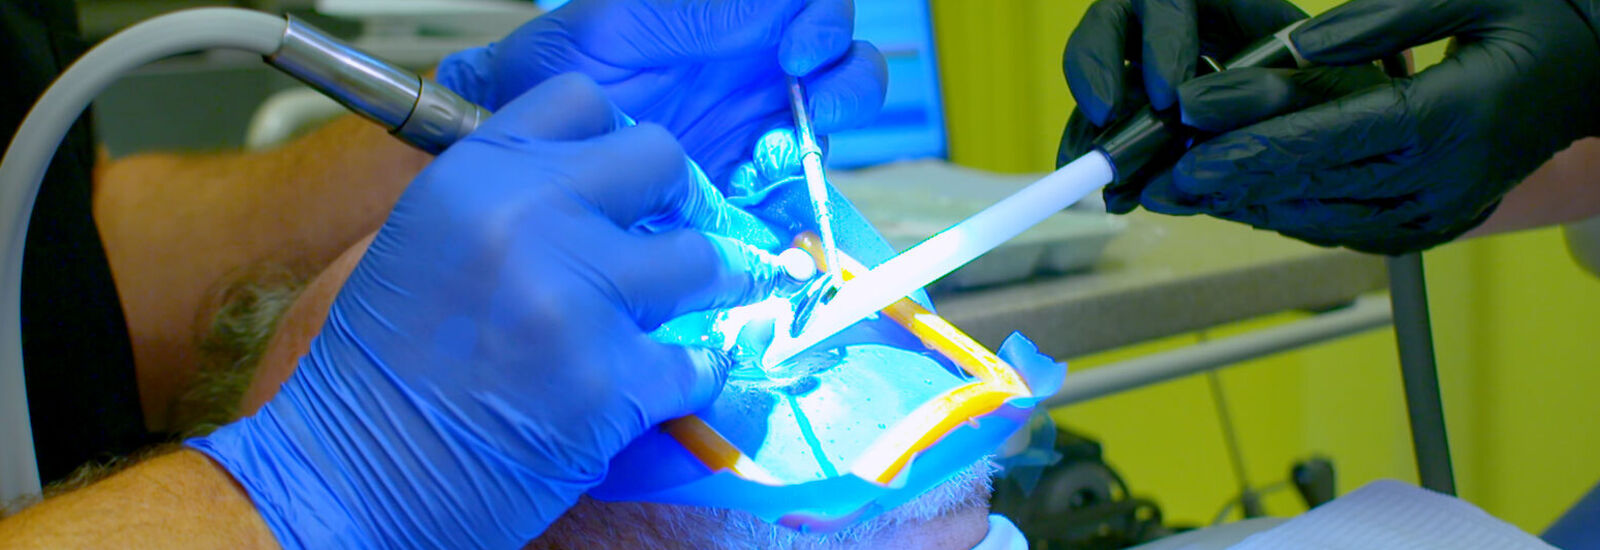 Close up of dental procedure